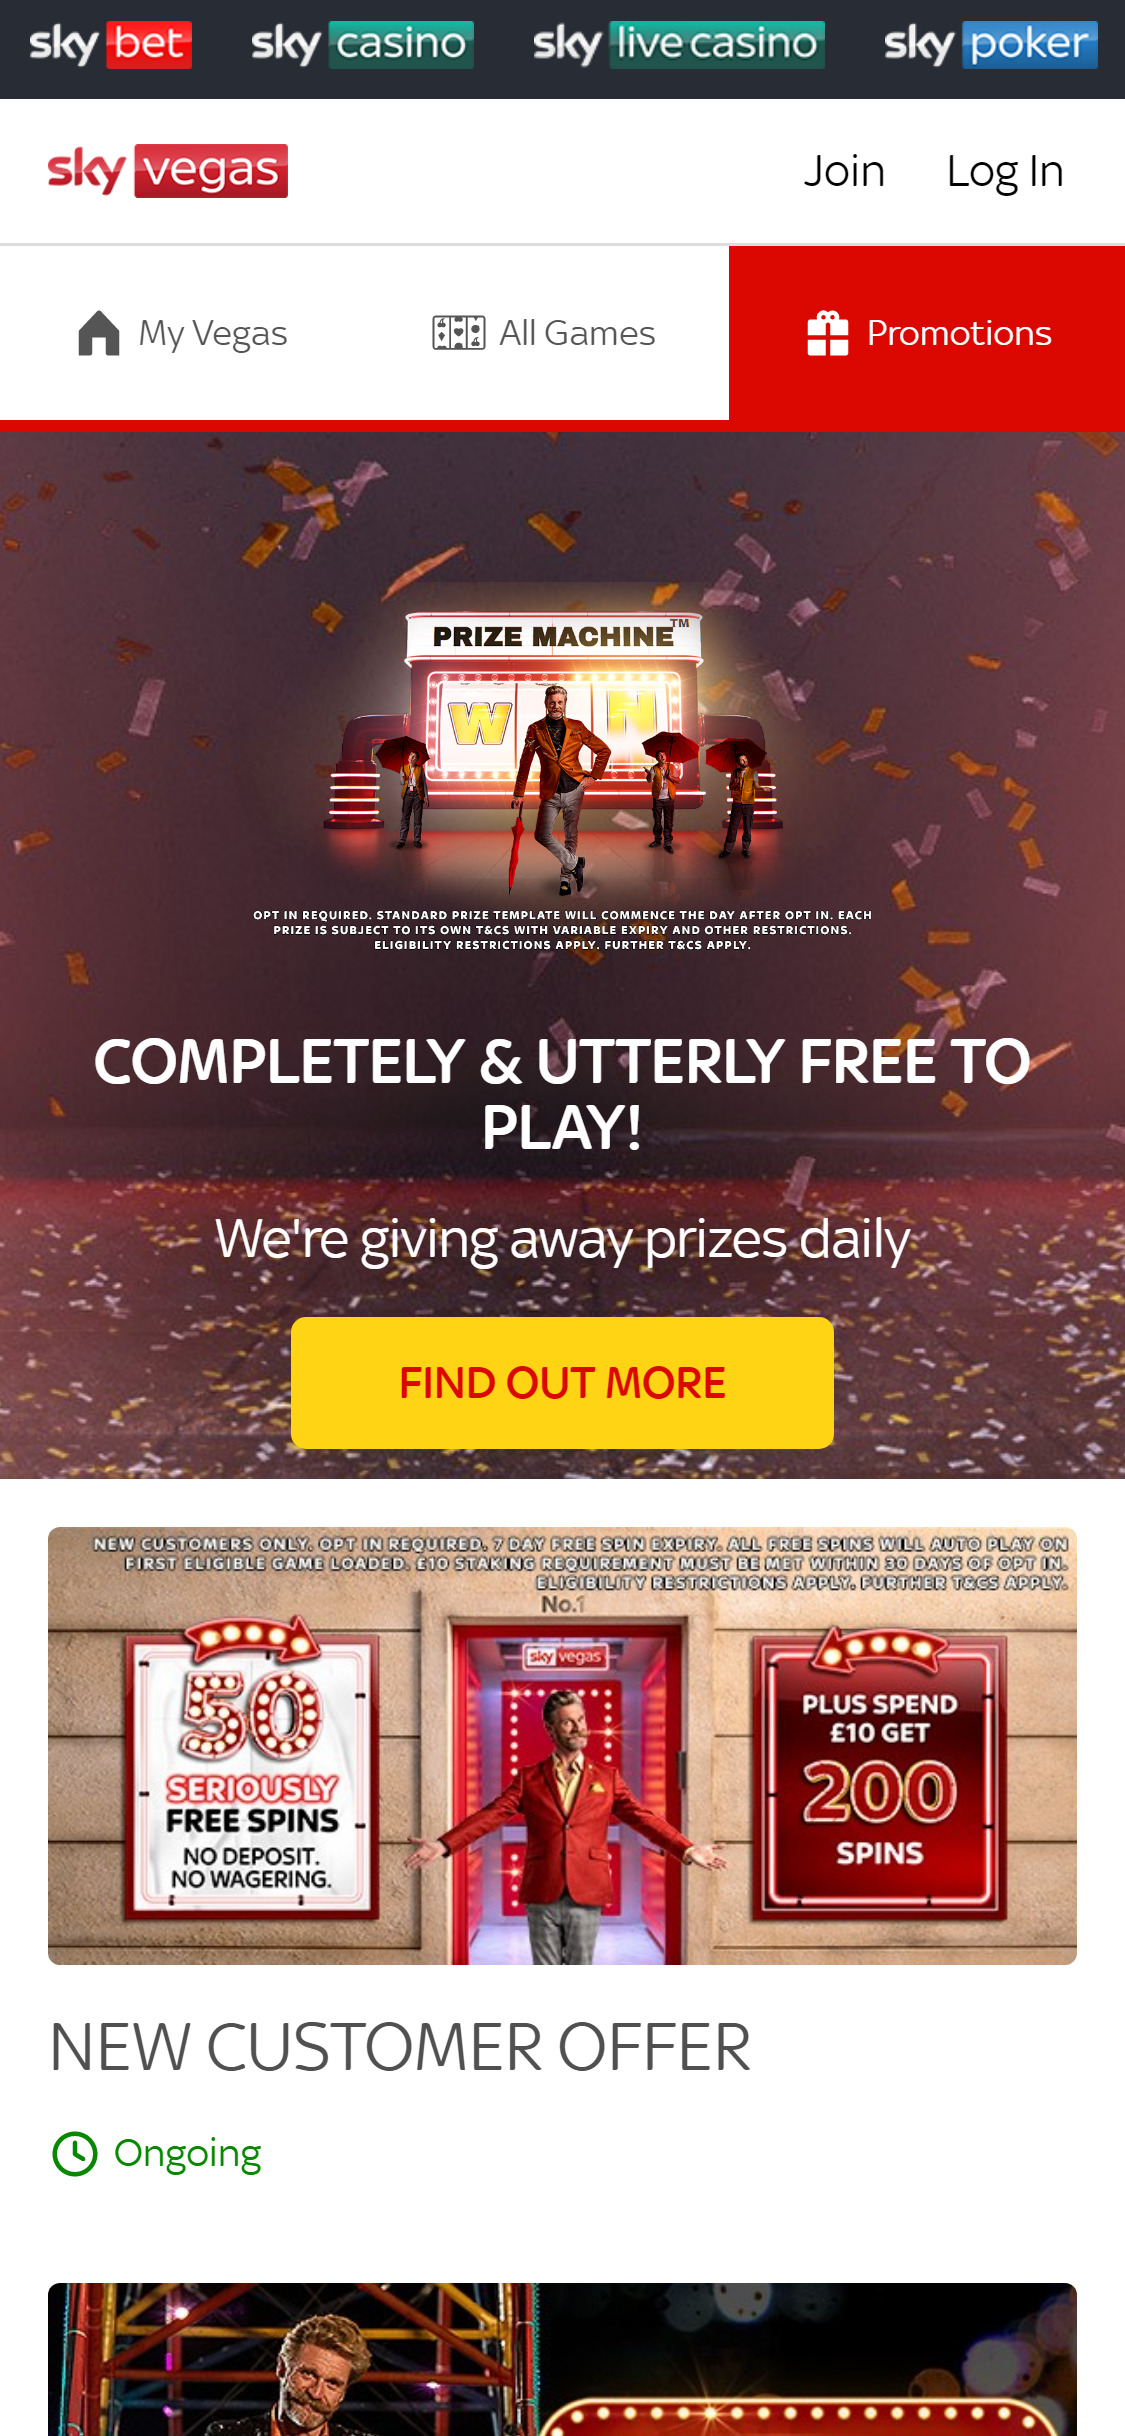 Sky Vegas Casino Mobile No Deposit Bonus Review